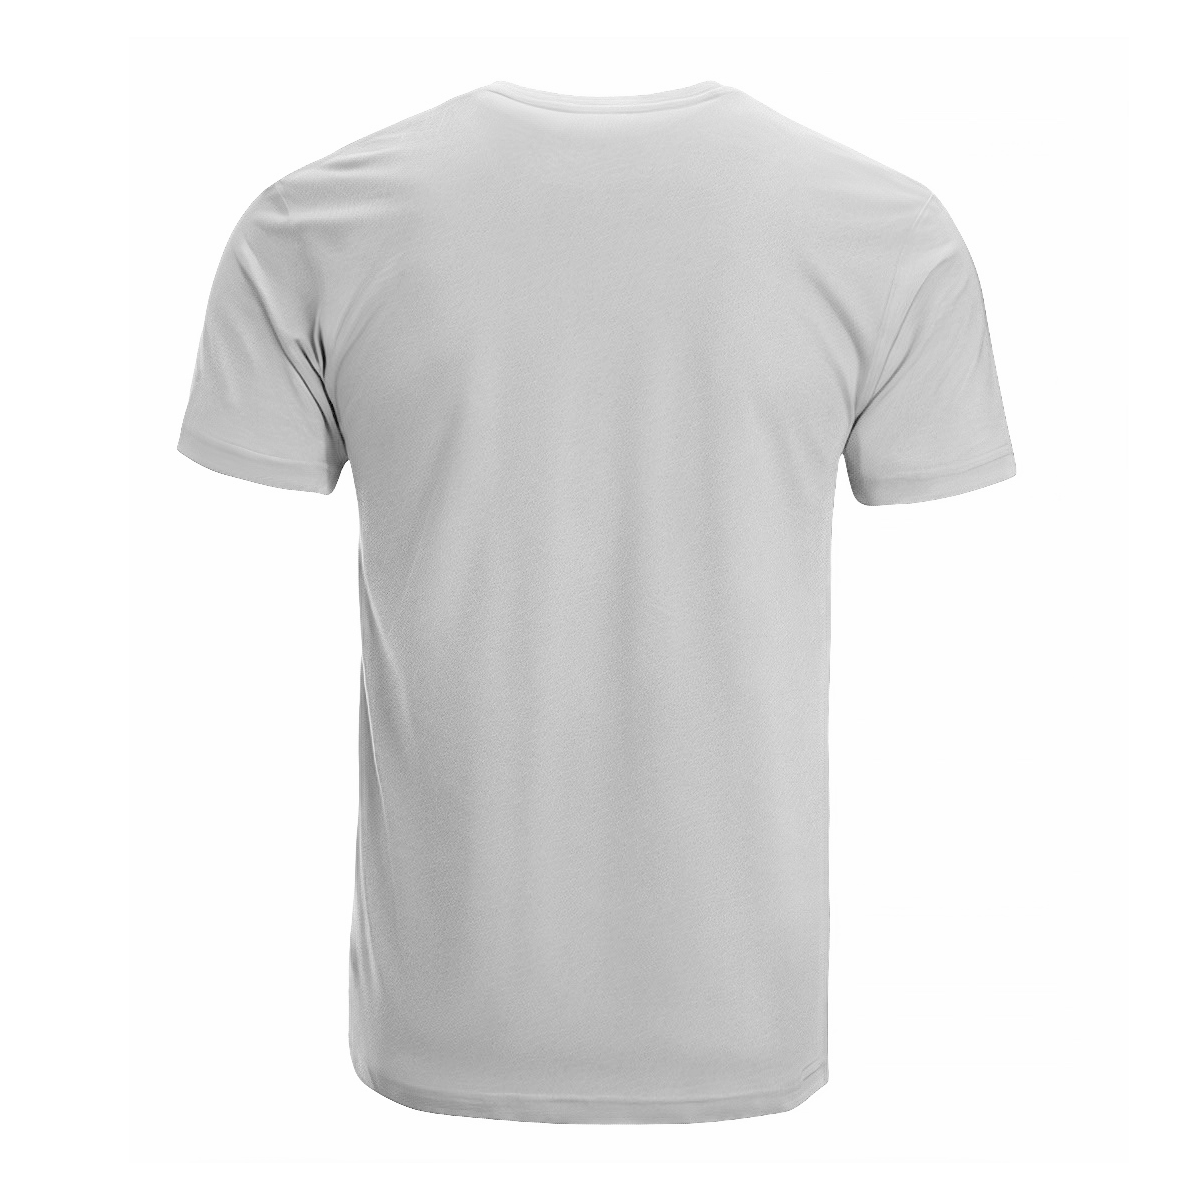 Roberts Tartan Crest T-shirt - I'm not yelling style